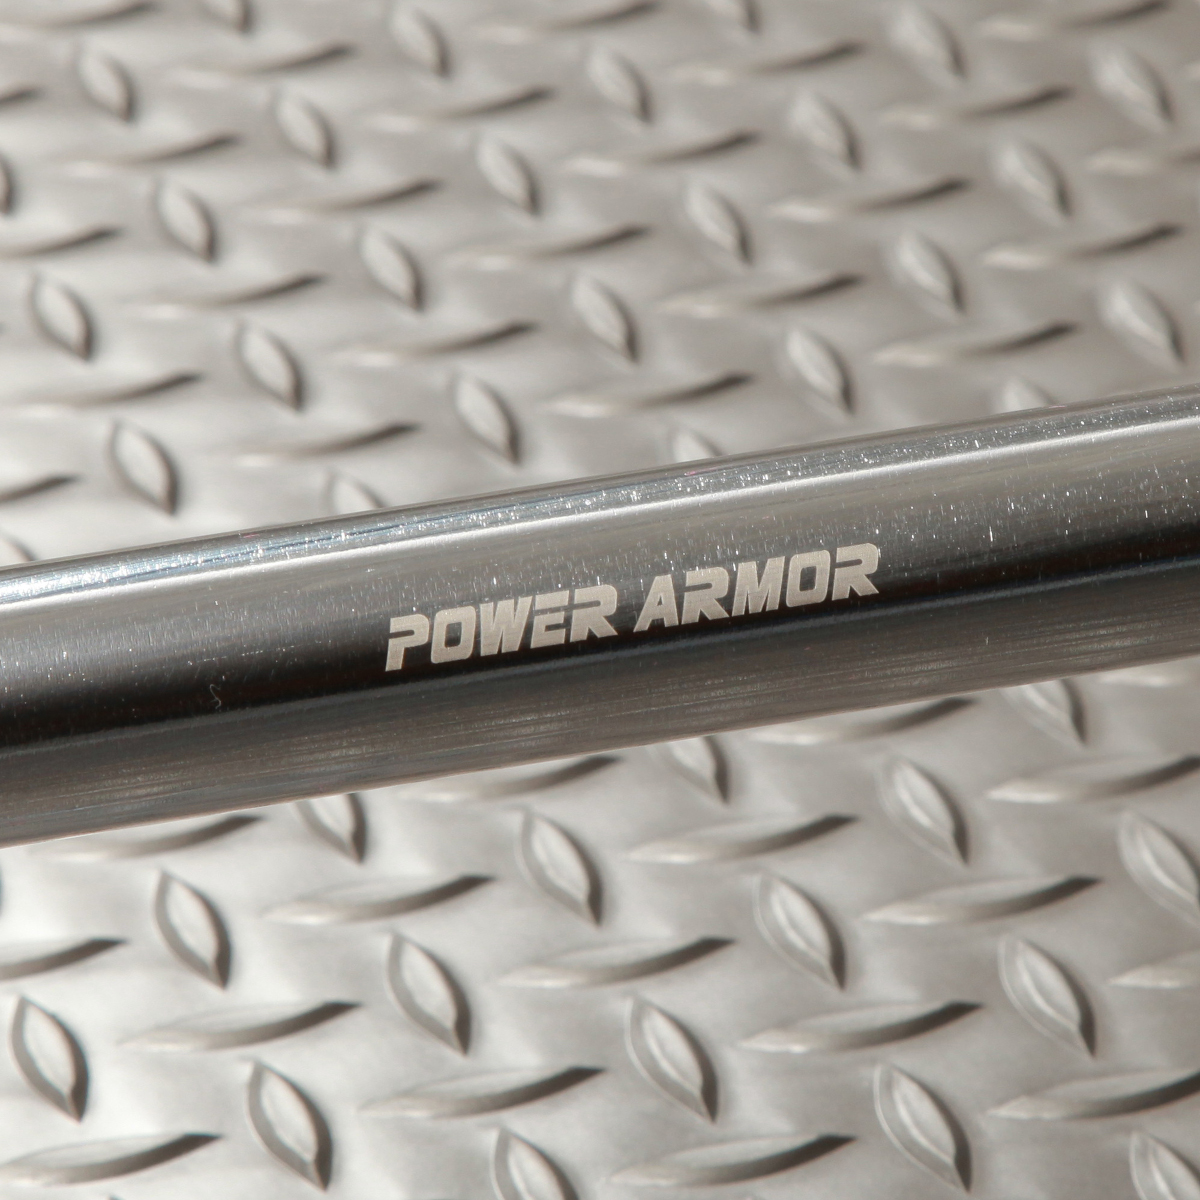 POWER ARMOR( энергия armor -) I янтарь bell гантель 98KG комплект / штанга штанга комплект гантель гантель комплект 